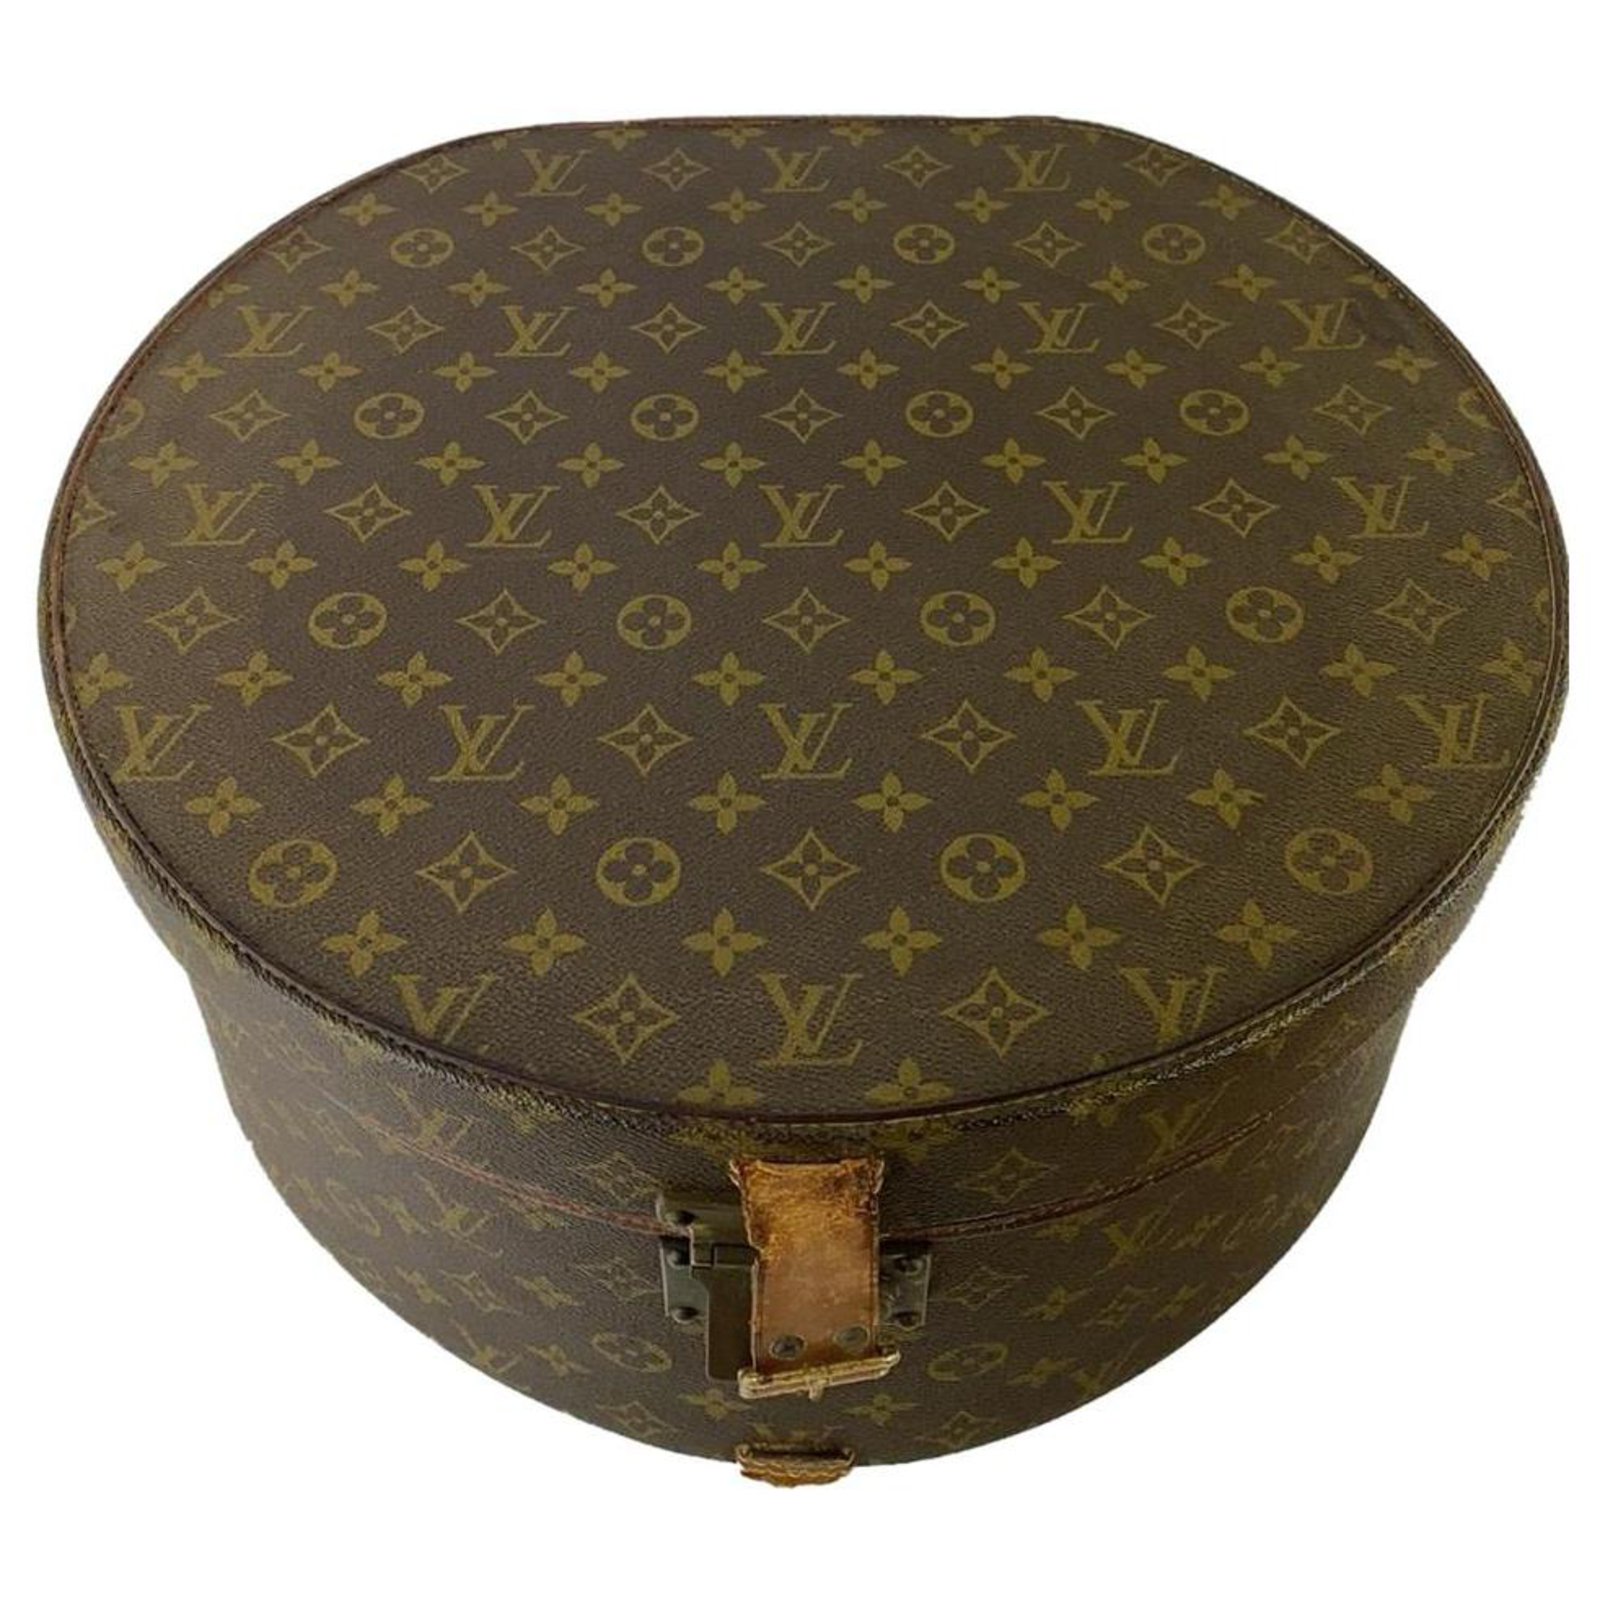 Louis Vuitton Hat Box 40 Monogram Canvas Travel Handbag